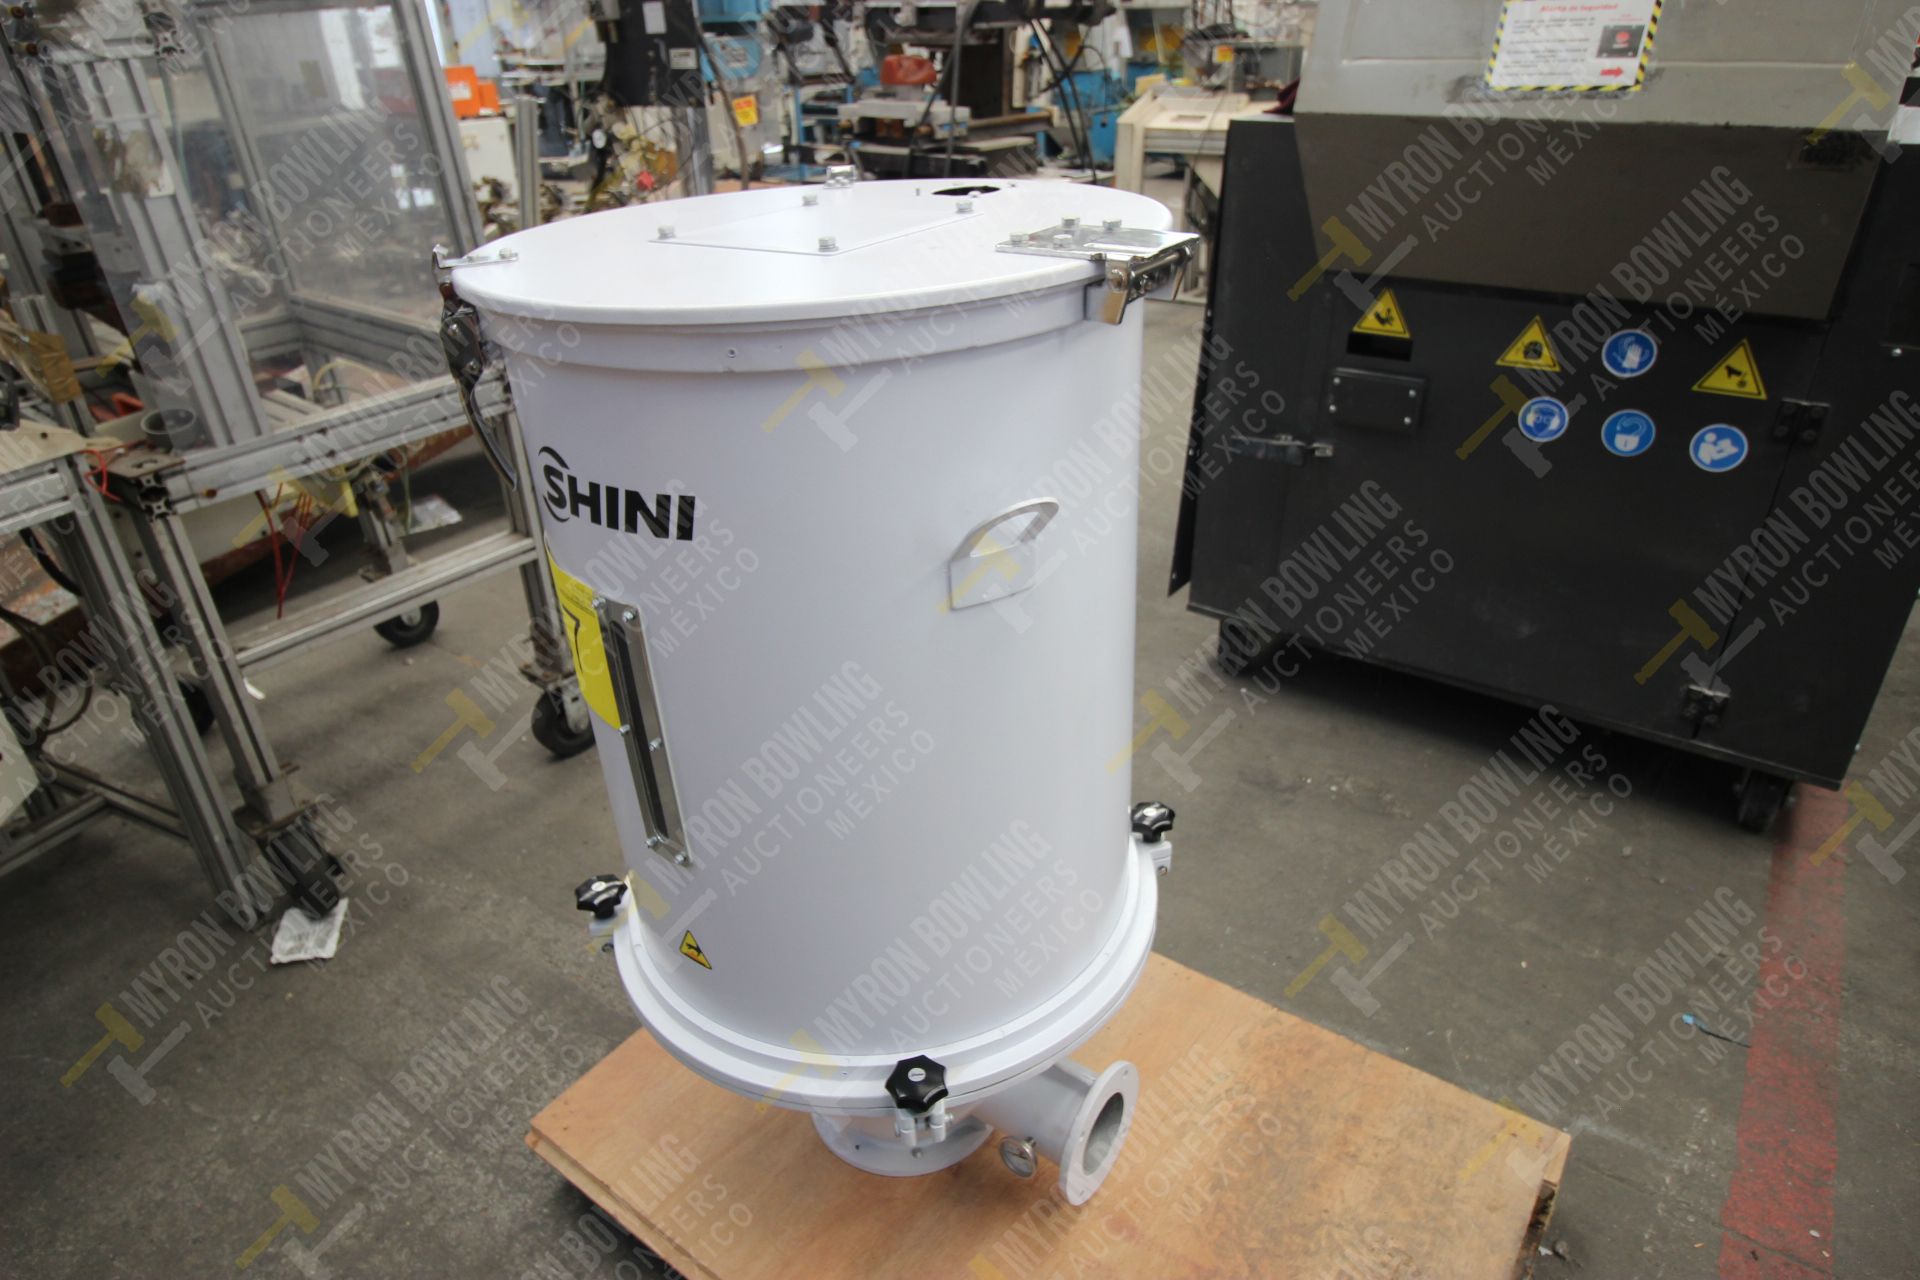 Shini Plastics Technologies 100kg hopper dryer mod. SHD-100SL-CE, with no control cabinet and blower - Image 3 of 12